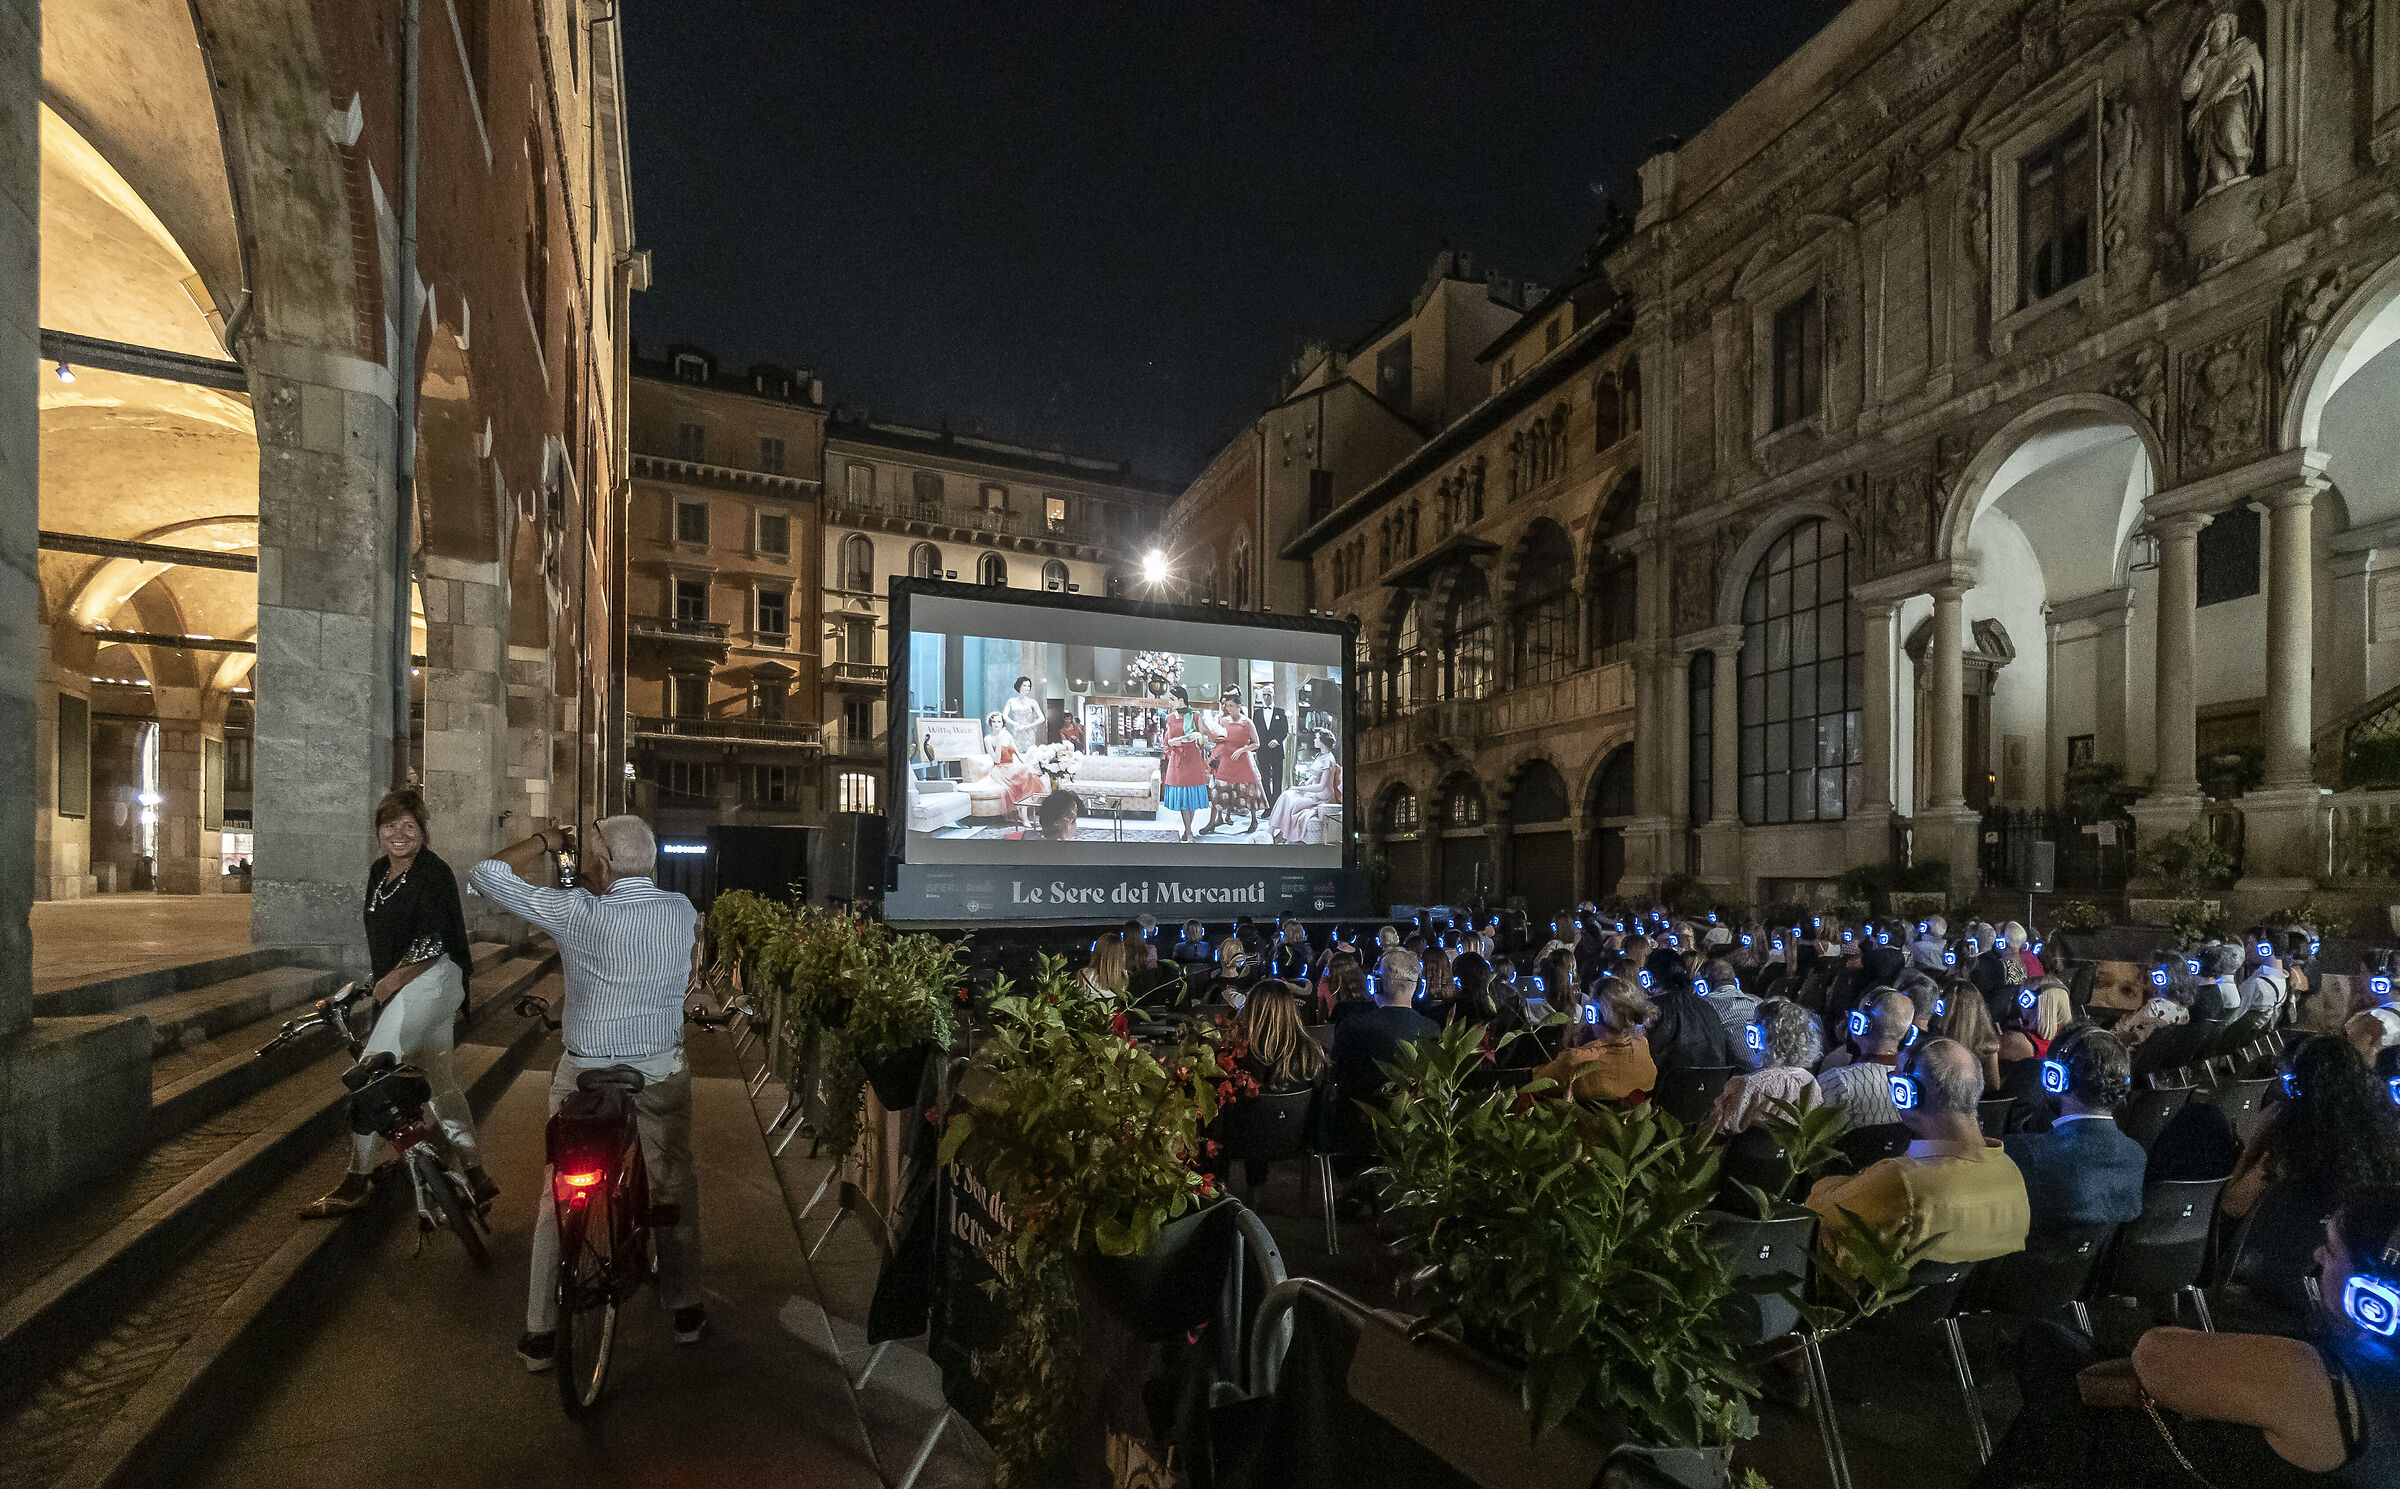 Cinema in Piazza dei Mercanti...